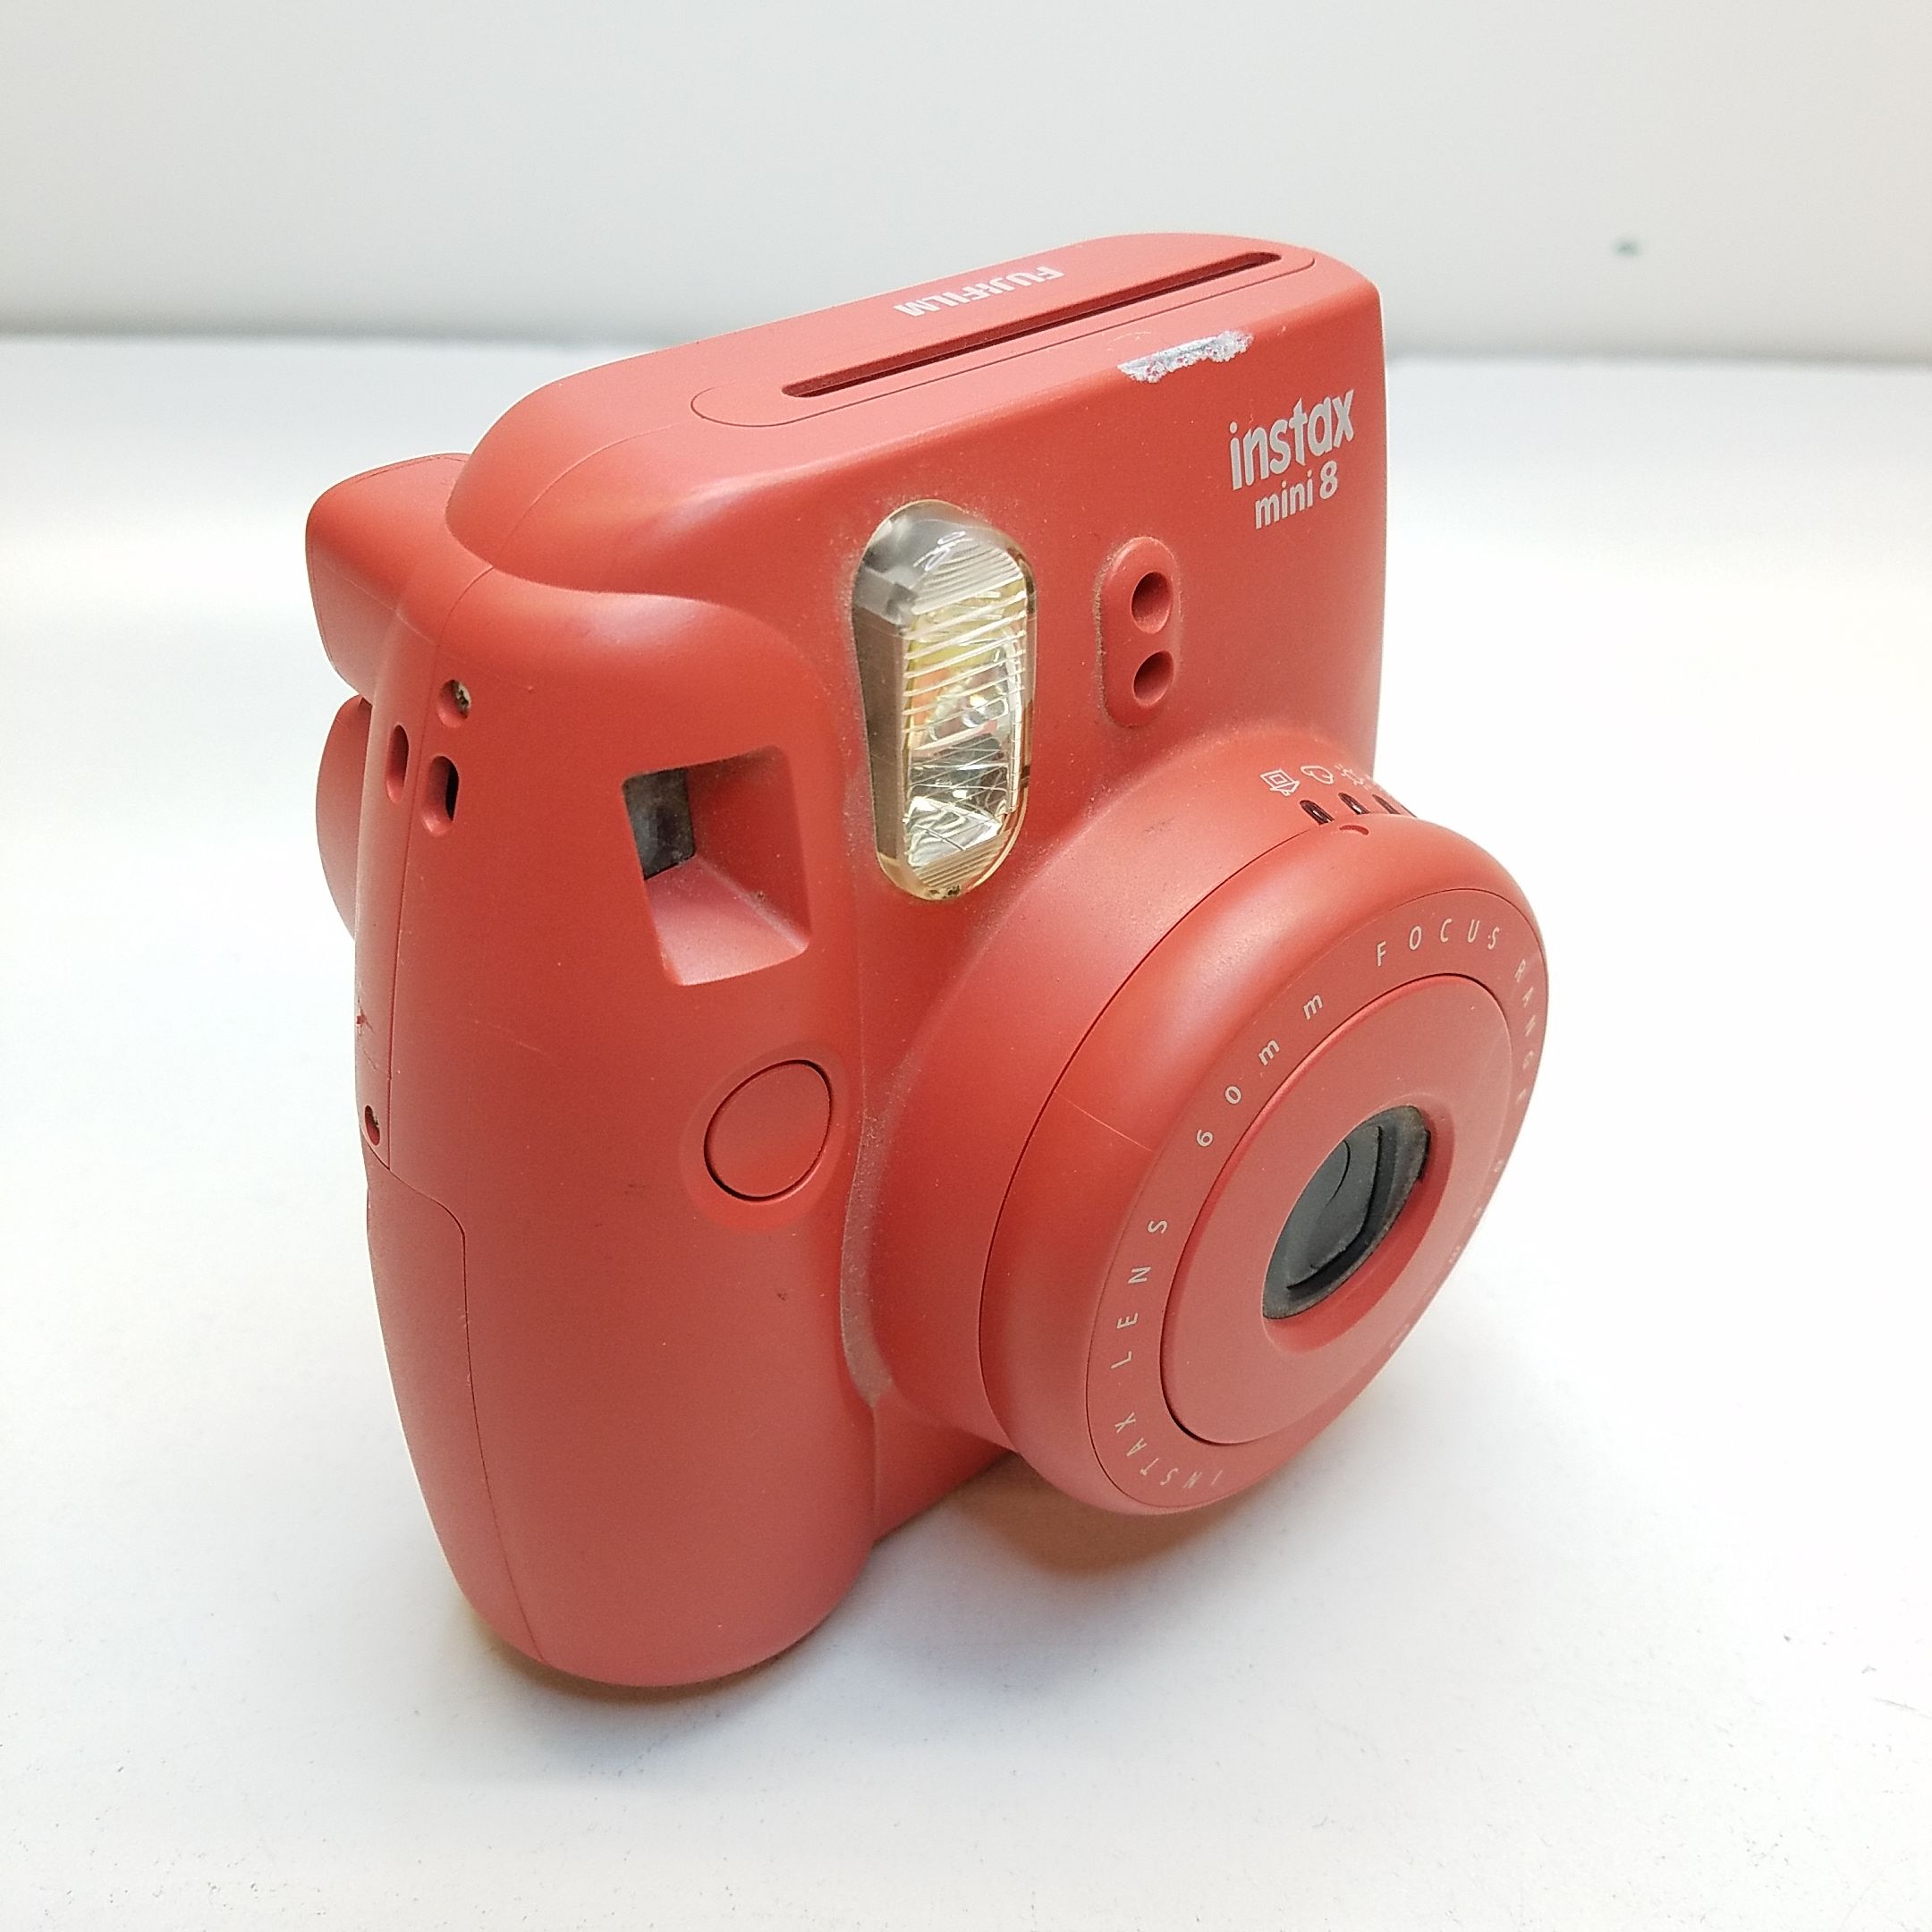 Technical Specs Fujifilm Instax Mini 8 set with film raspberry